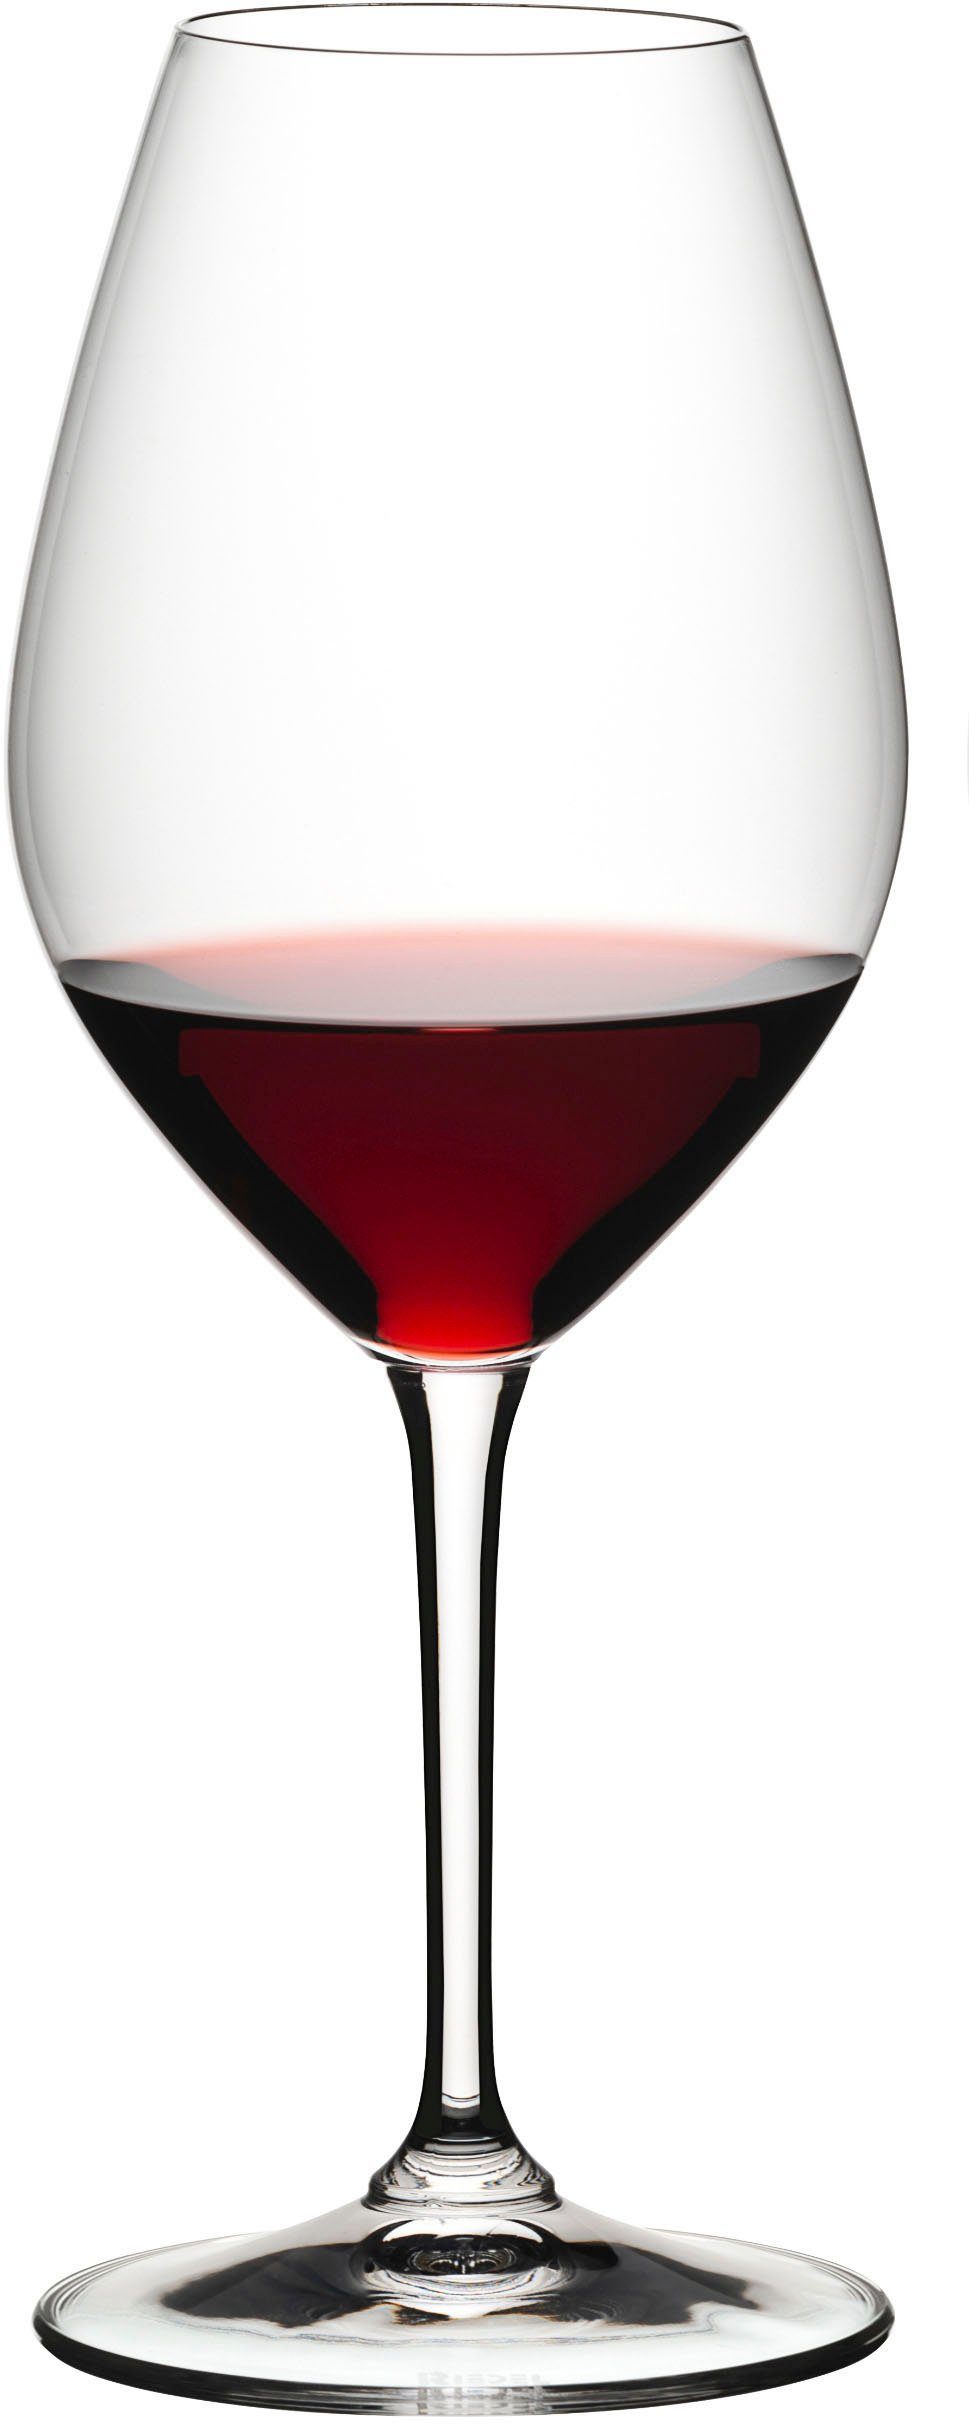 RIEDEL Glas RIEDEL WINE FRIENDLY Rotweinglas Wine Friendly, Kristallglas, Made in Germany, 667 ml, 4-teilig